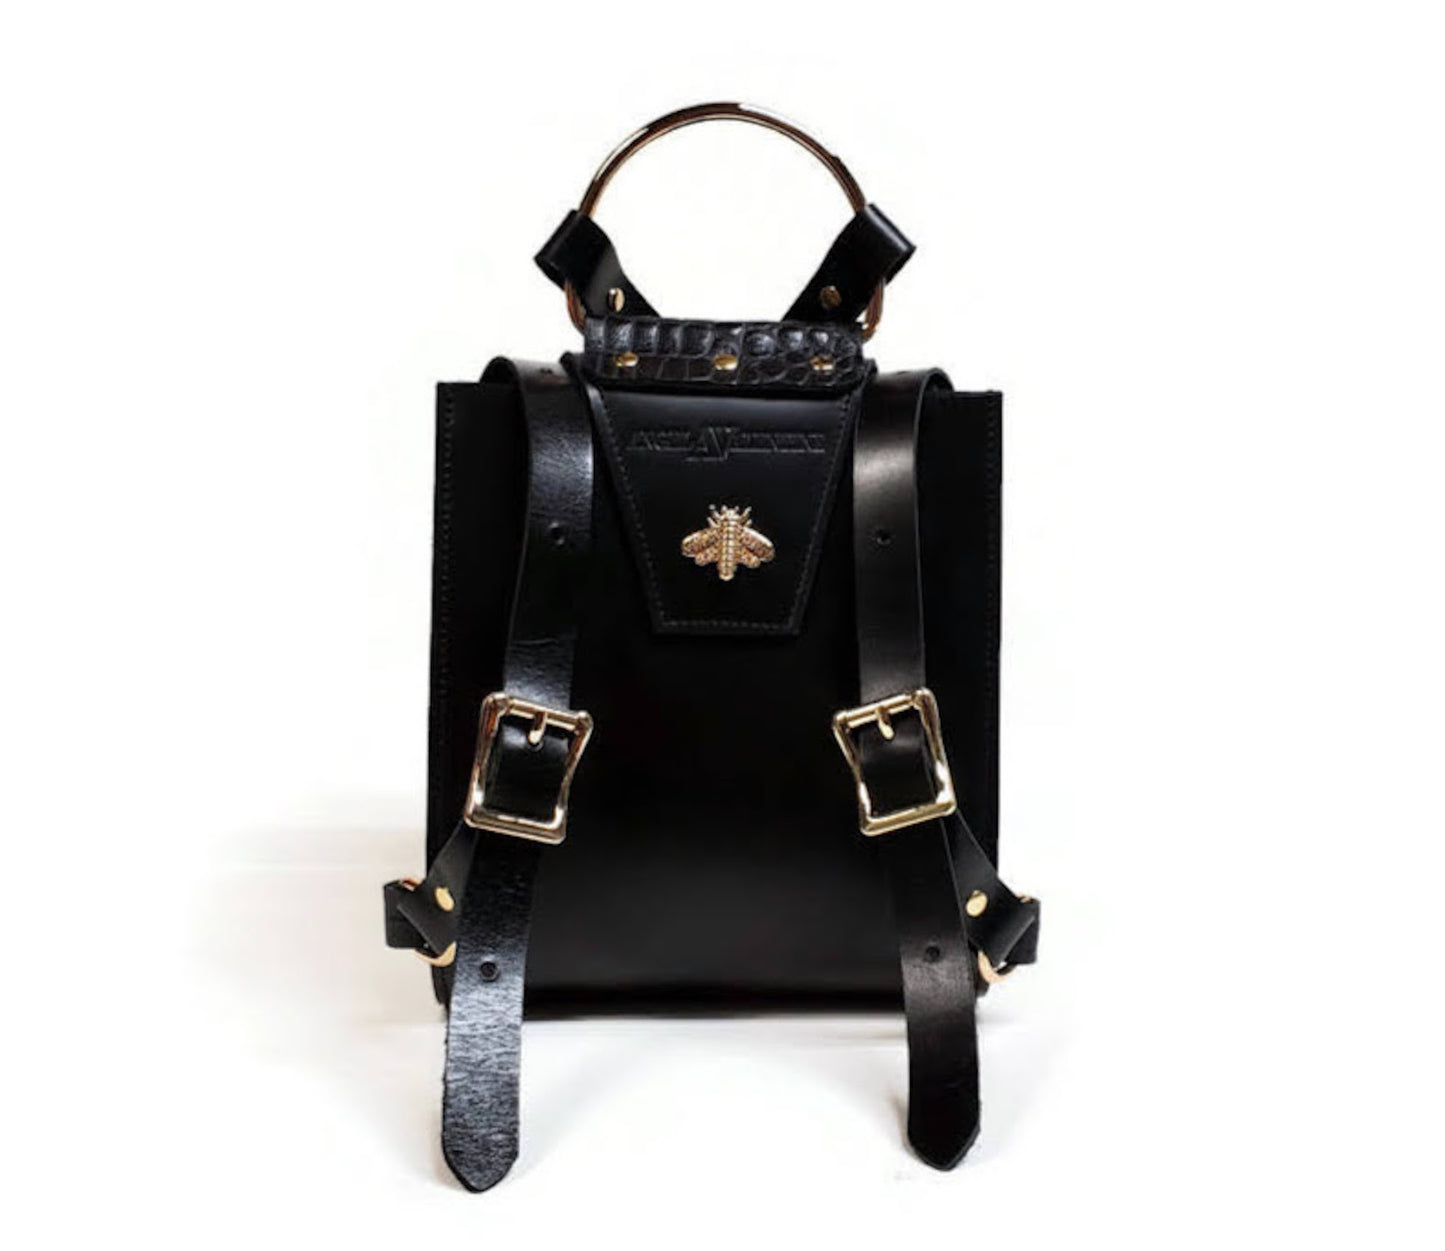 Romi backpack in black